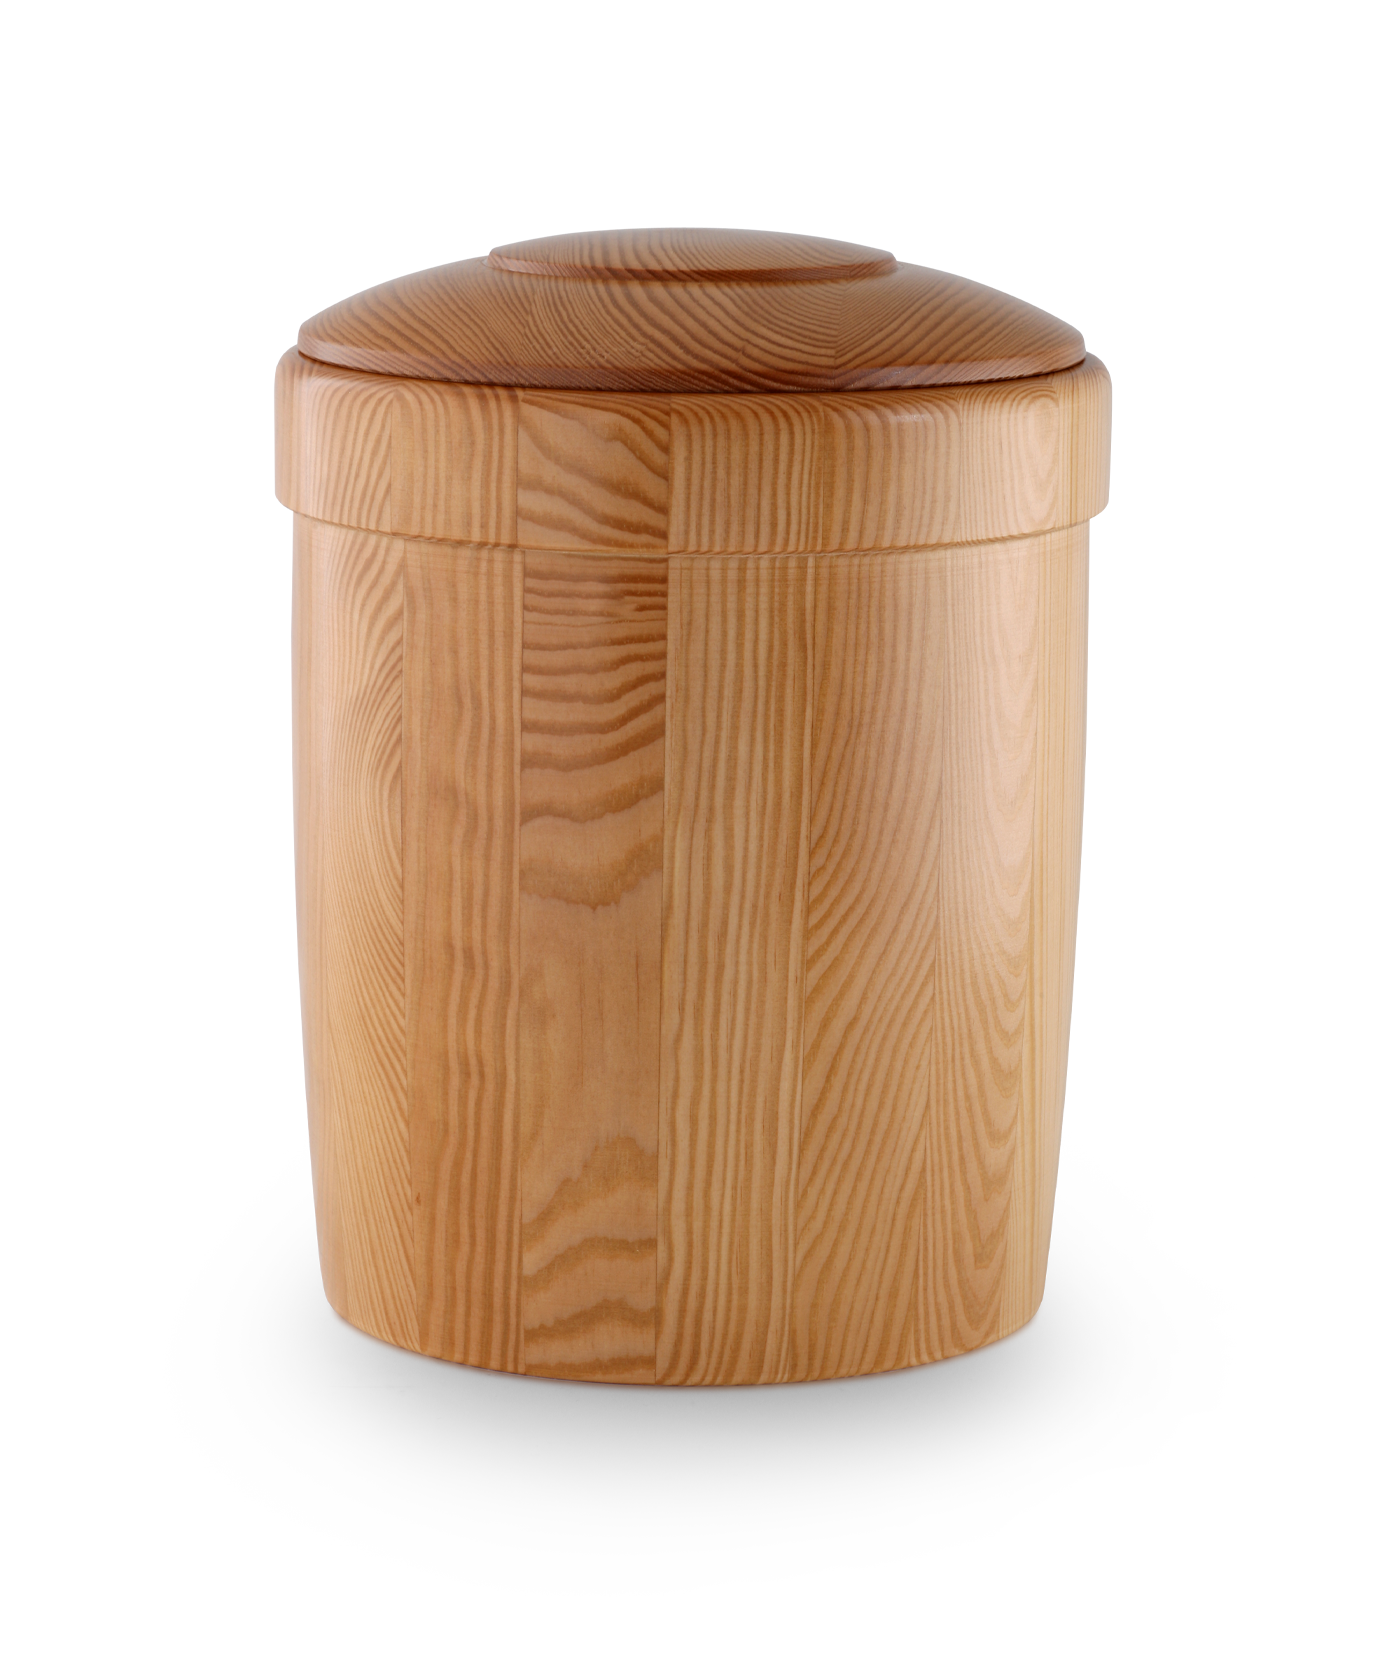 Völsing urn softwood honey wood